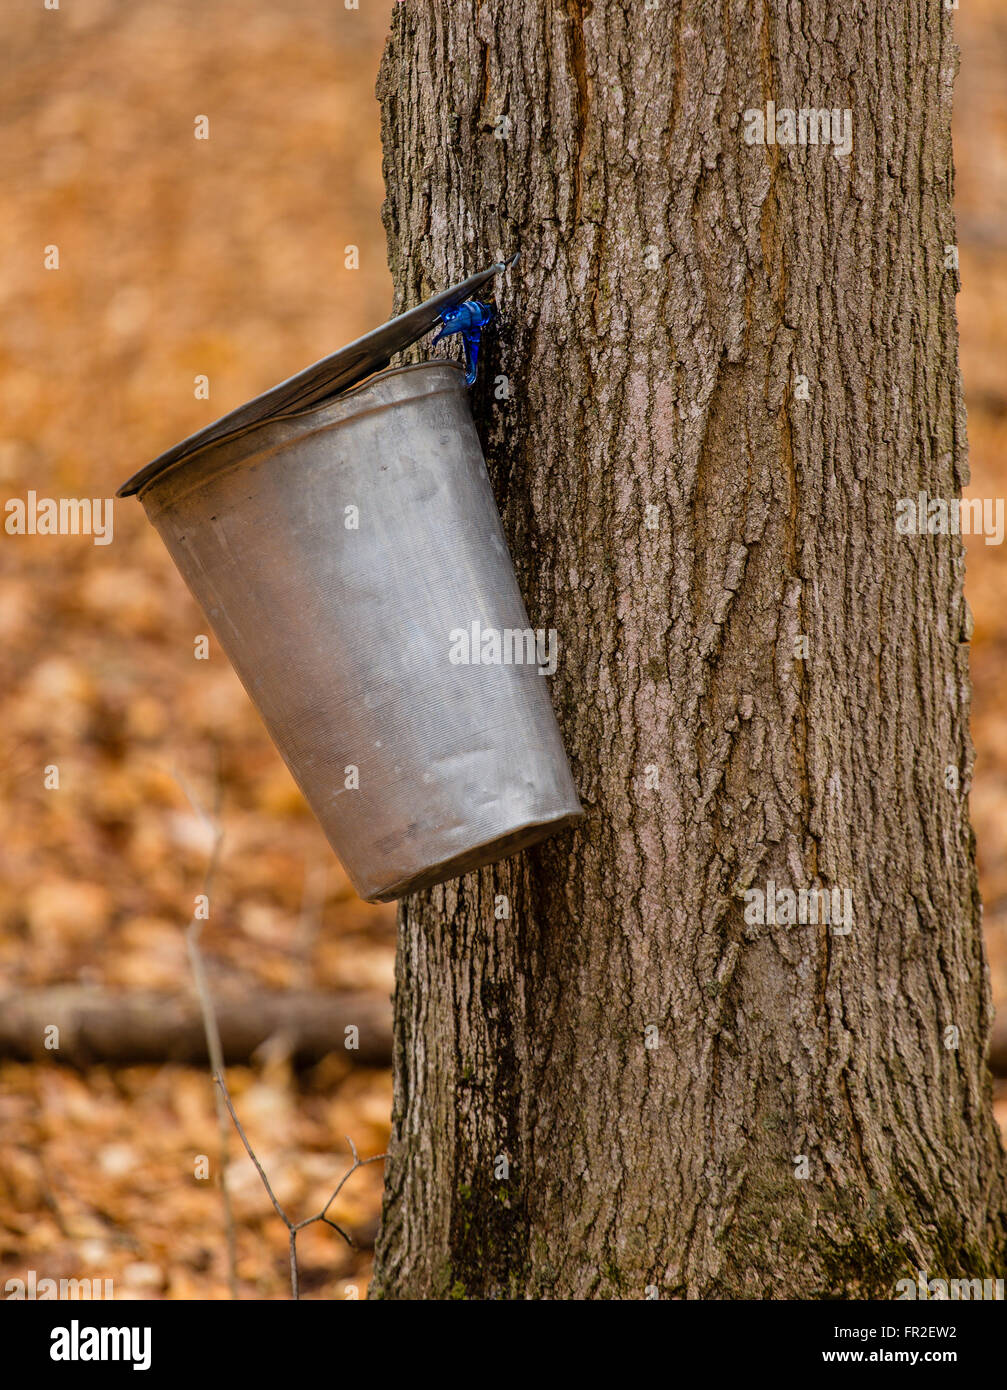 Collecting maple sap in Ontario Canada. Stock Photo